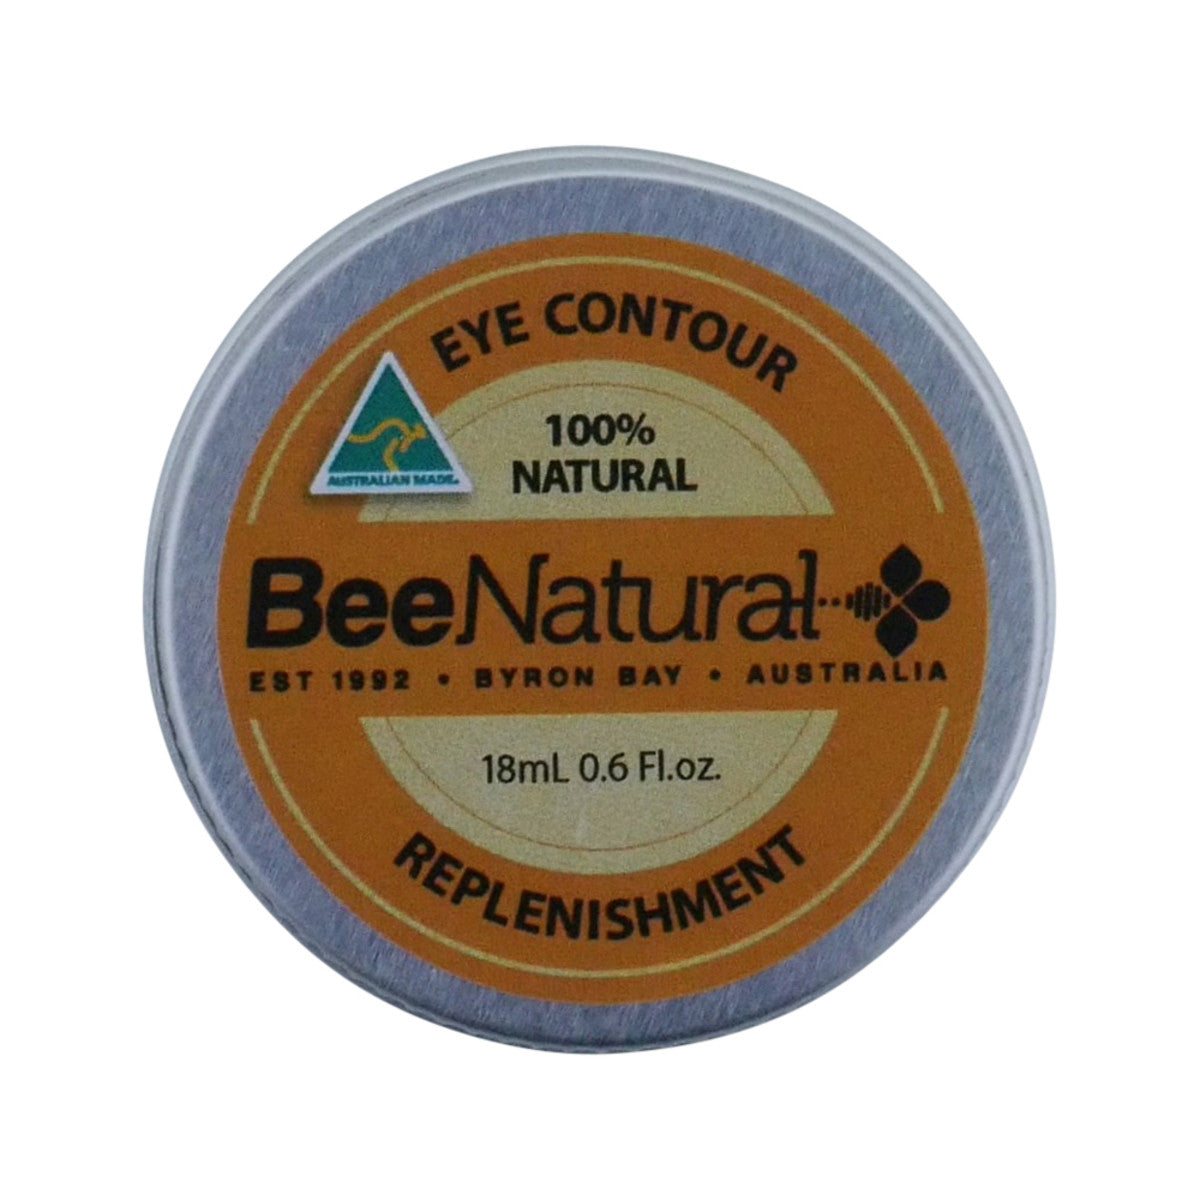 Bee Natural - Eye Contour Replenishment